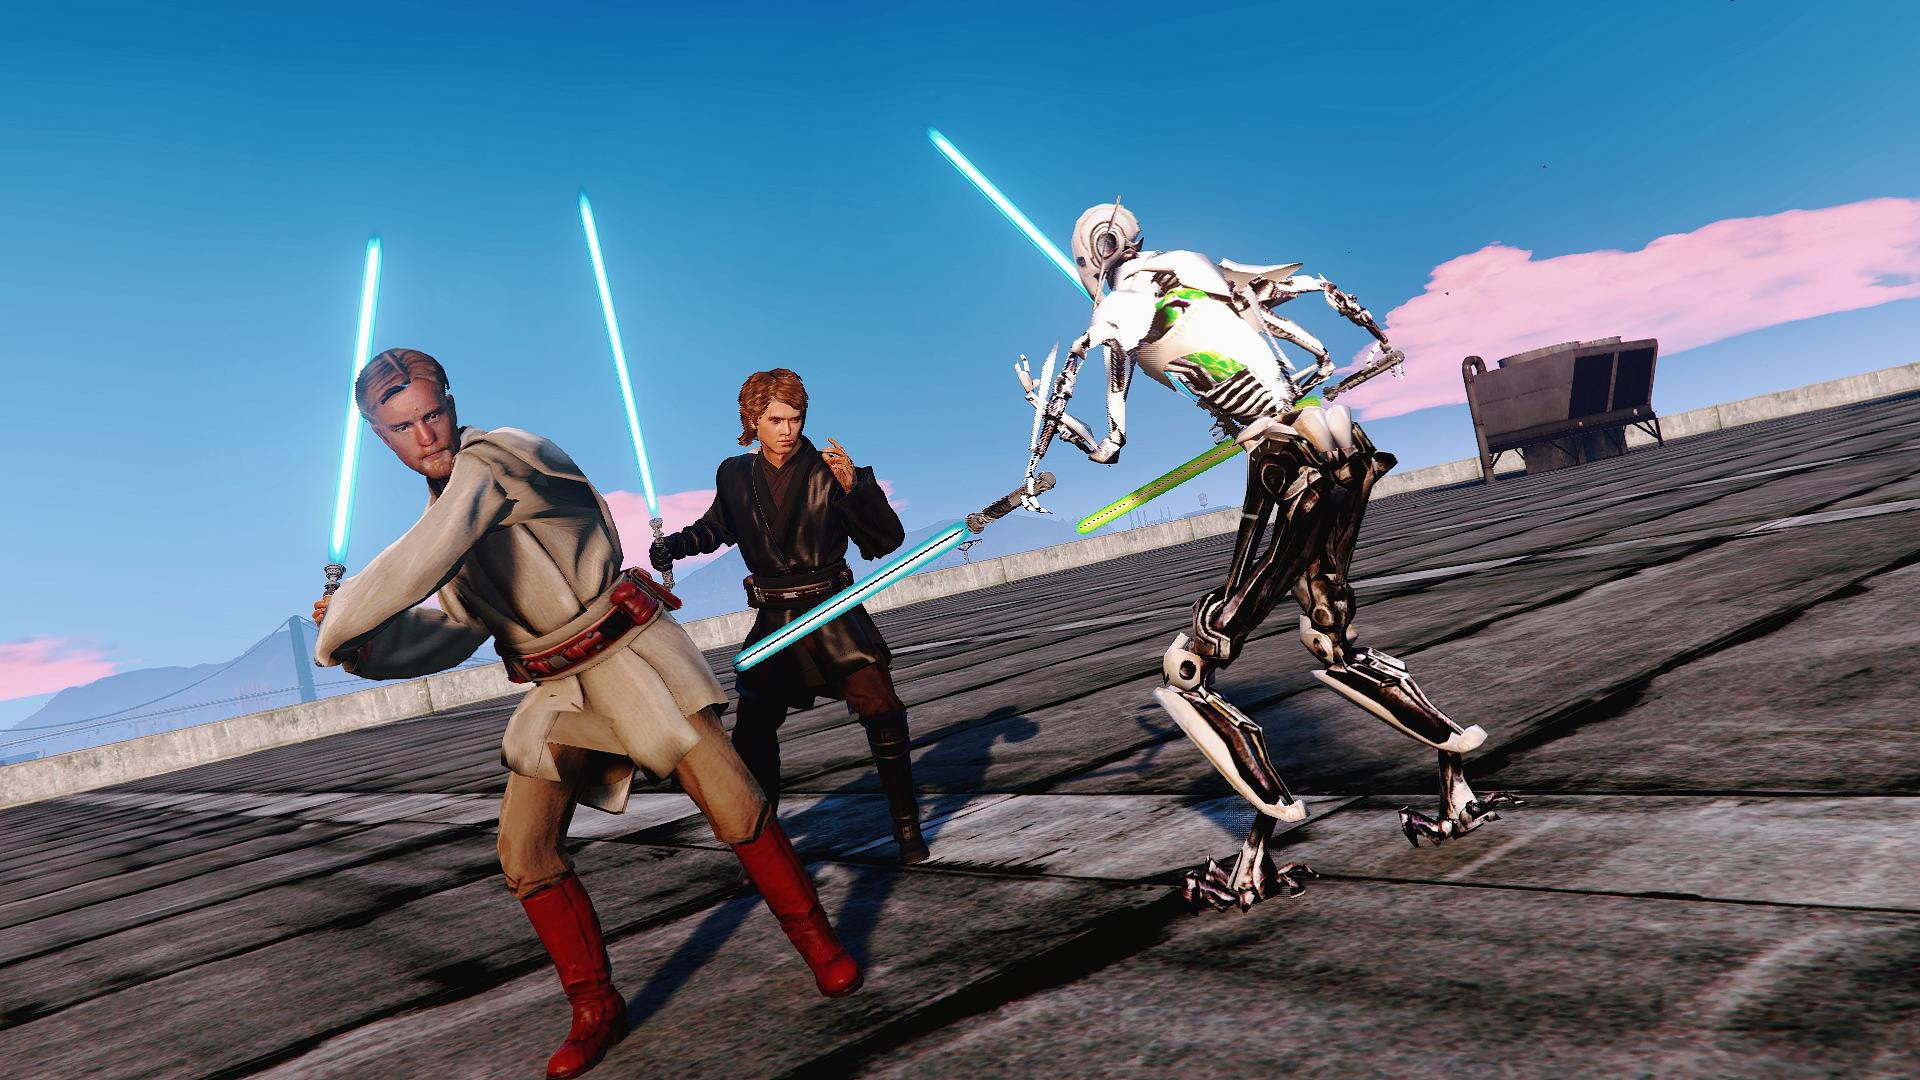 Star Wars Episode Iii Obi Wan Gta5 Mods Com Images, Photos, Reviews